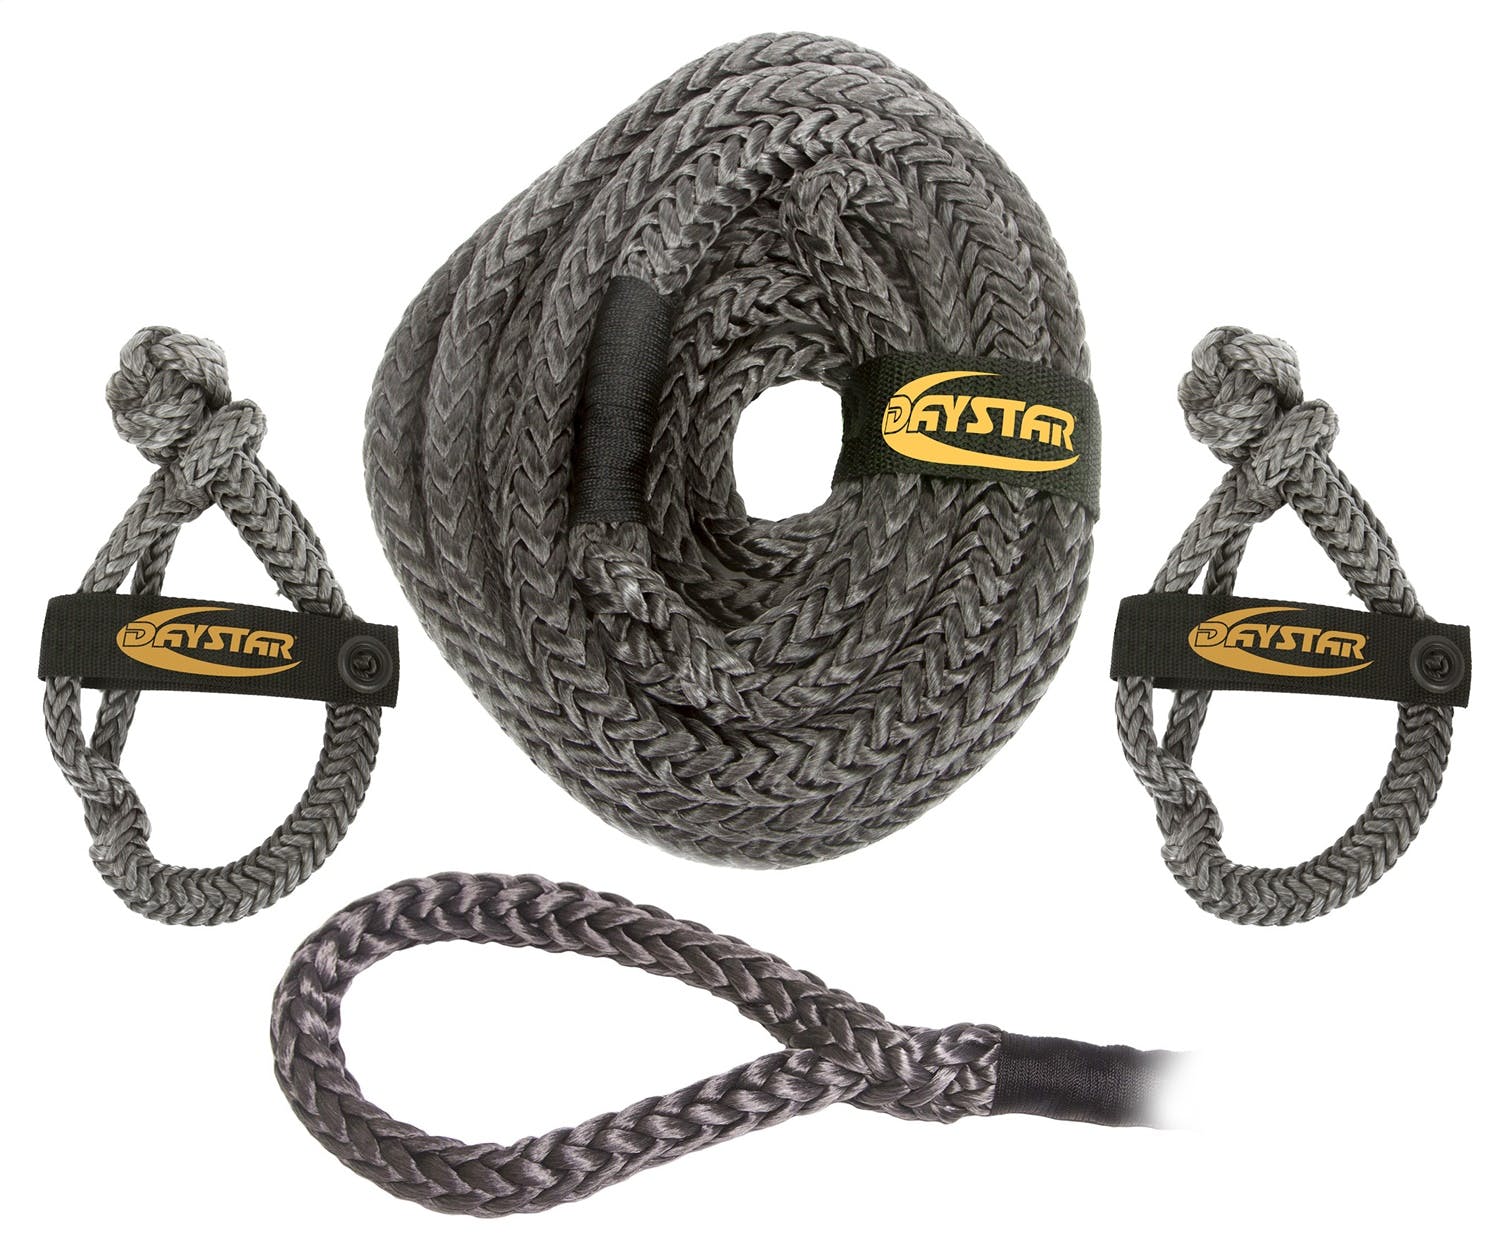 Daystar KU10205BK 3/4 inch X 25 Black Rope, Loop Ends w/(2) 3/8 inch Soft Shackles/Nylon Recovery Bag